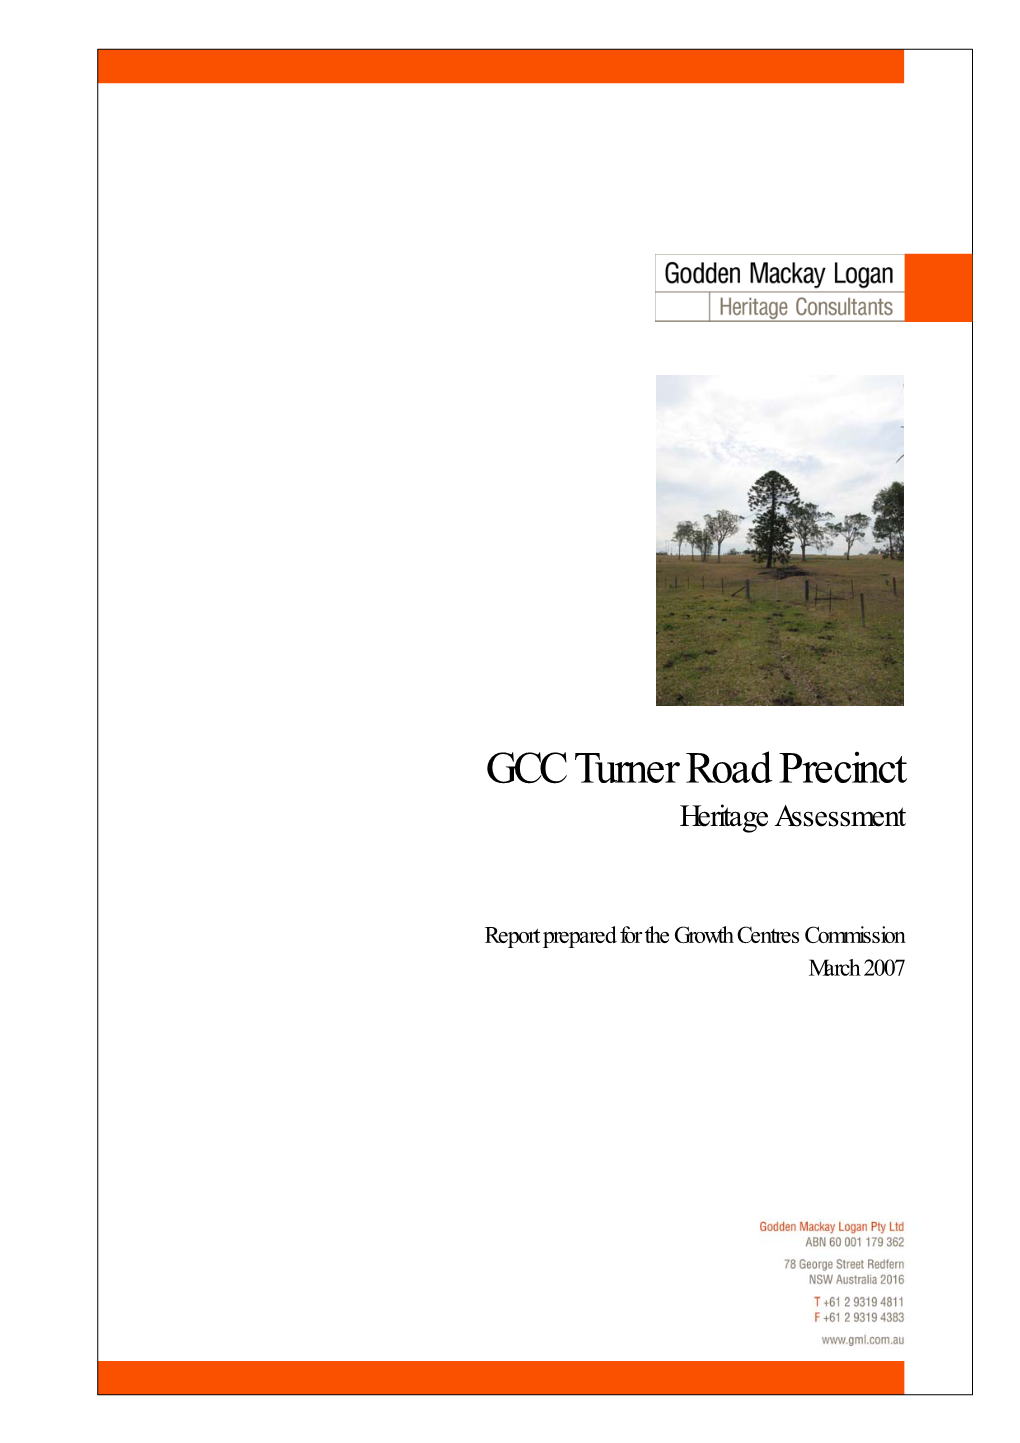 GCC Turner Road Precinct Heritage Assessment